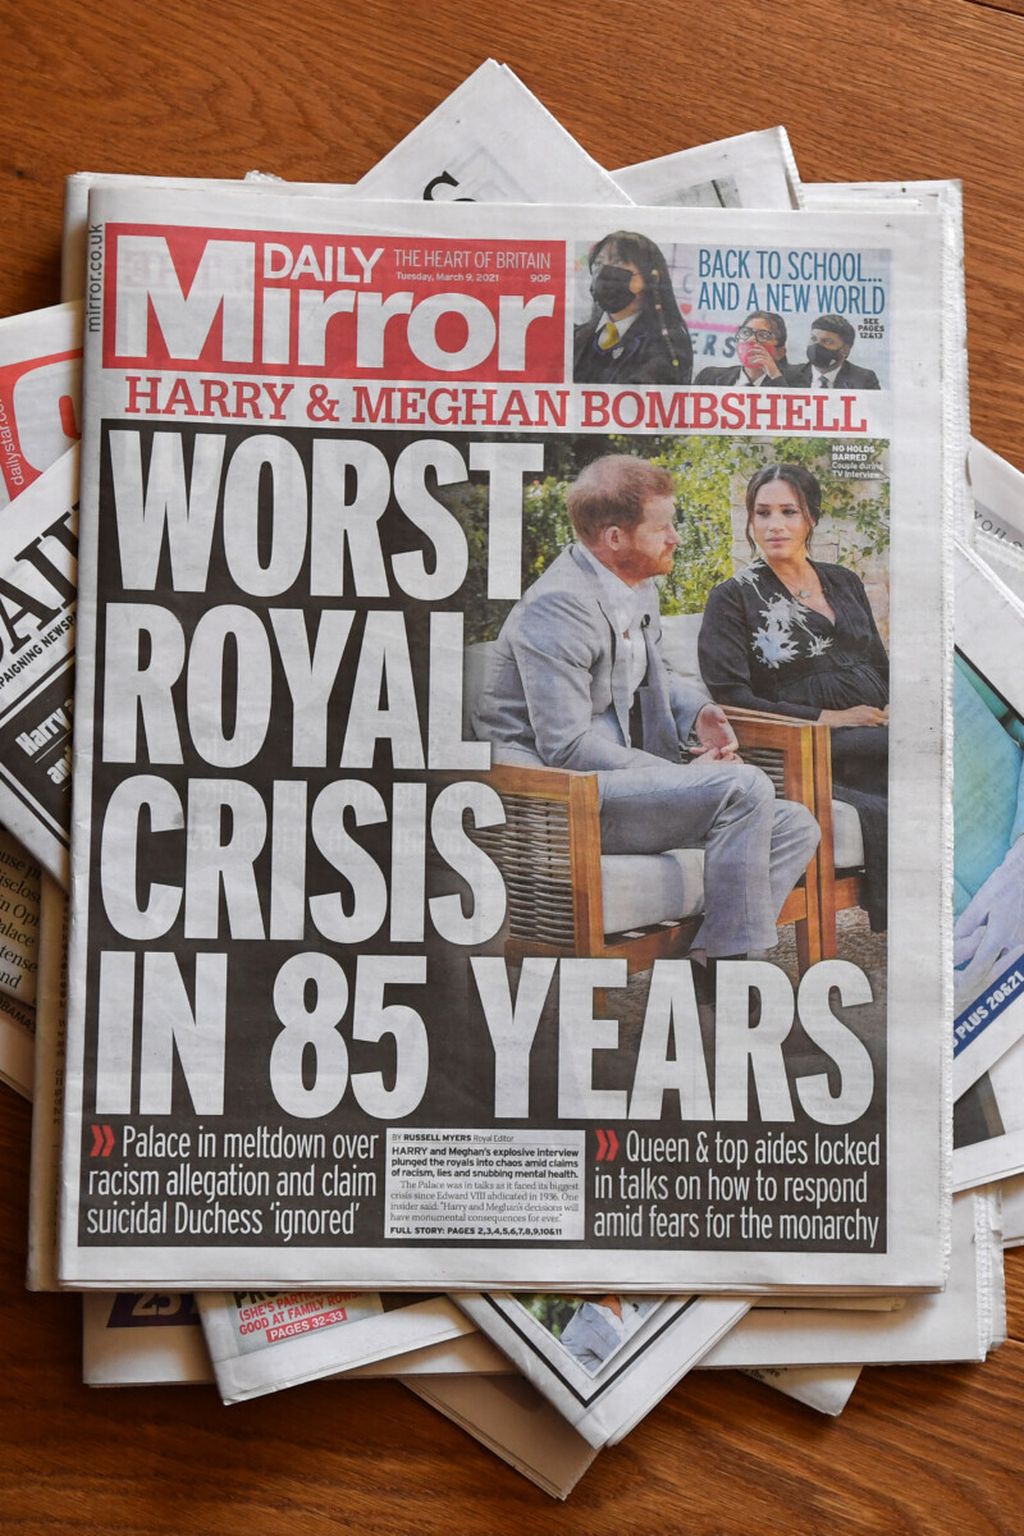 Halaman depan <i>Daily Mirrror</i>, salah satu media Inggris, edisi Maret 2021 menampilkan Pangeran Harry dan istrinya, Meghan Markle. Pada 6 Oktober 2022, Pangeran Harry kembali menggugat media di Inggris atas dugaan pelanggaran hak pribadi dan penyadapan ilegal. 